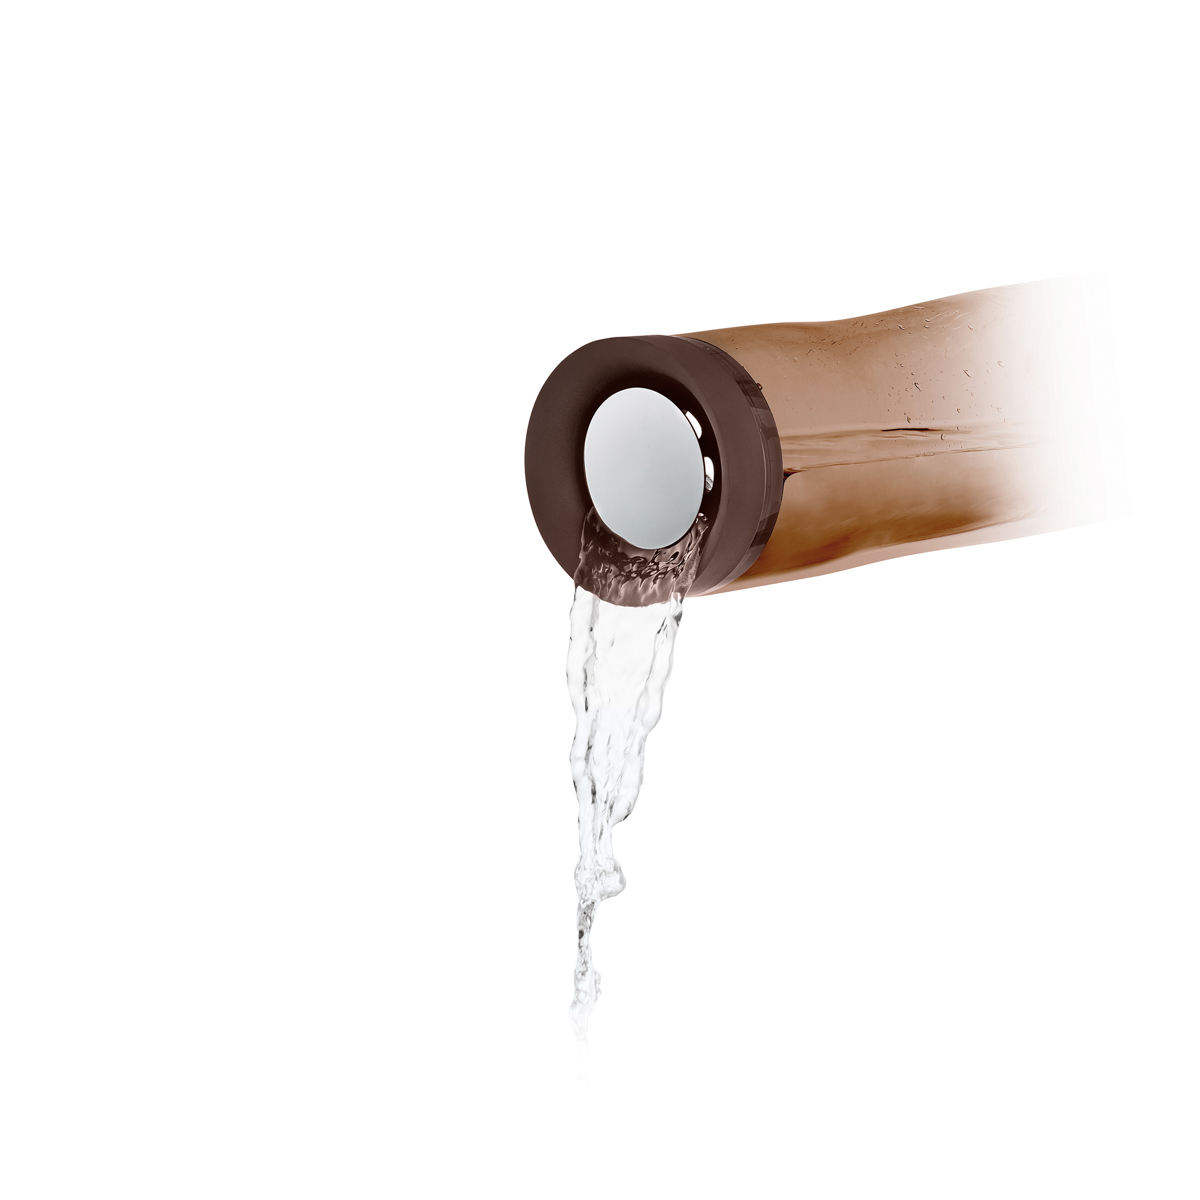 Wasserkaraffe -SPLASH- Coffee 1000 ml, Ø 9 cm. Material: Edelstahl poliert, Silikon, Glas farbig. Von Blomus.